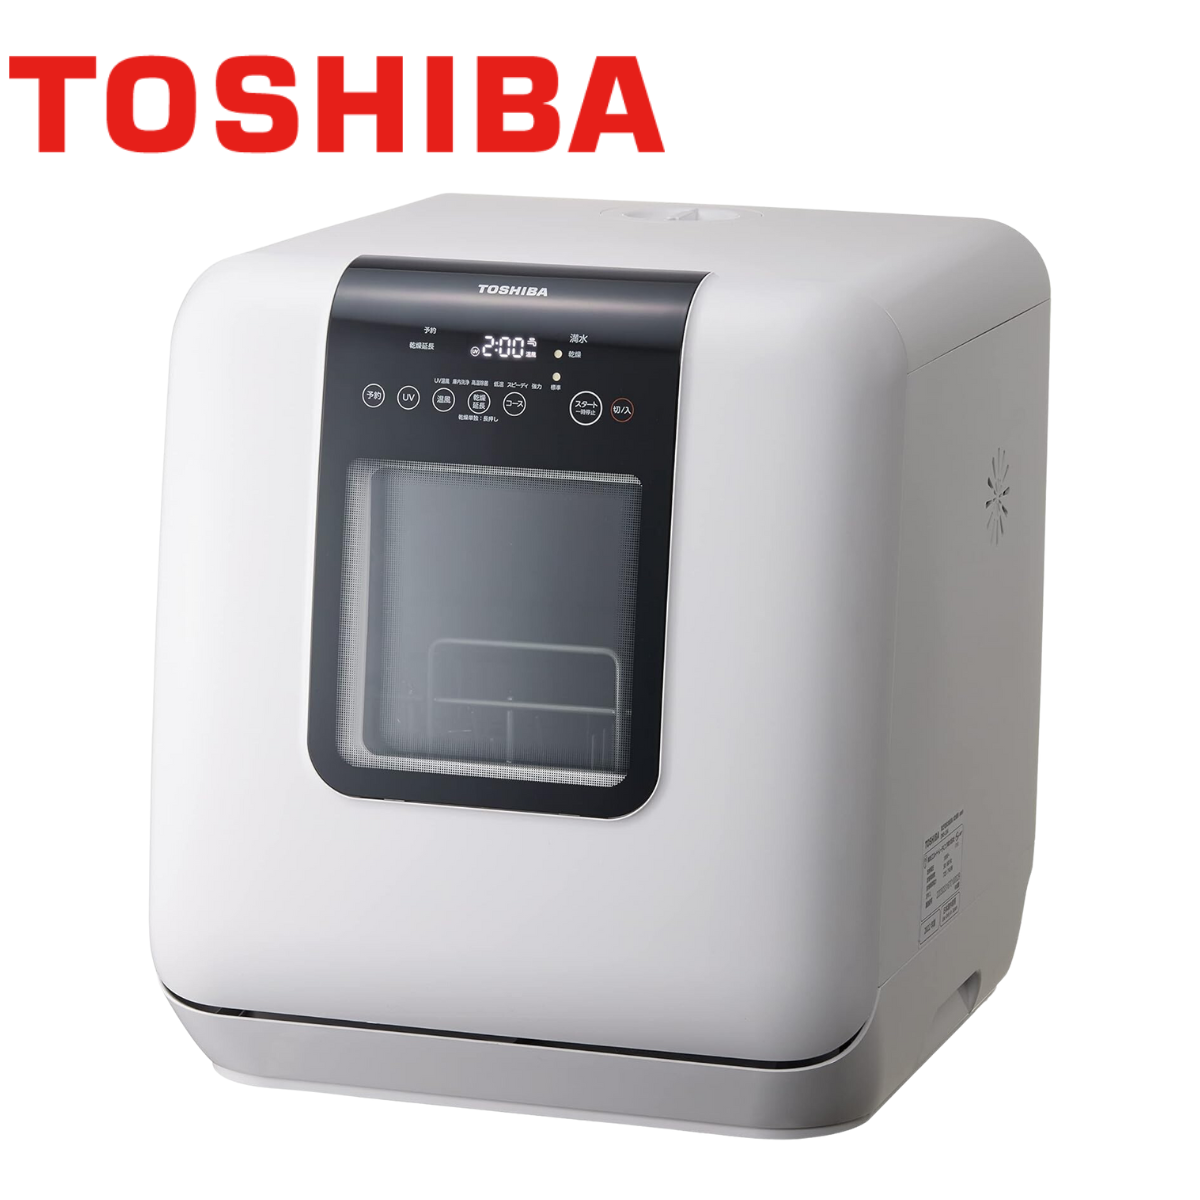 TOSHIBA】卓上型食器洗い乾燥機 DWS-33A